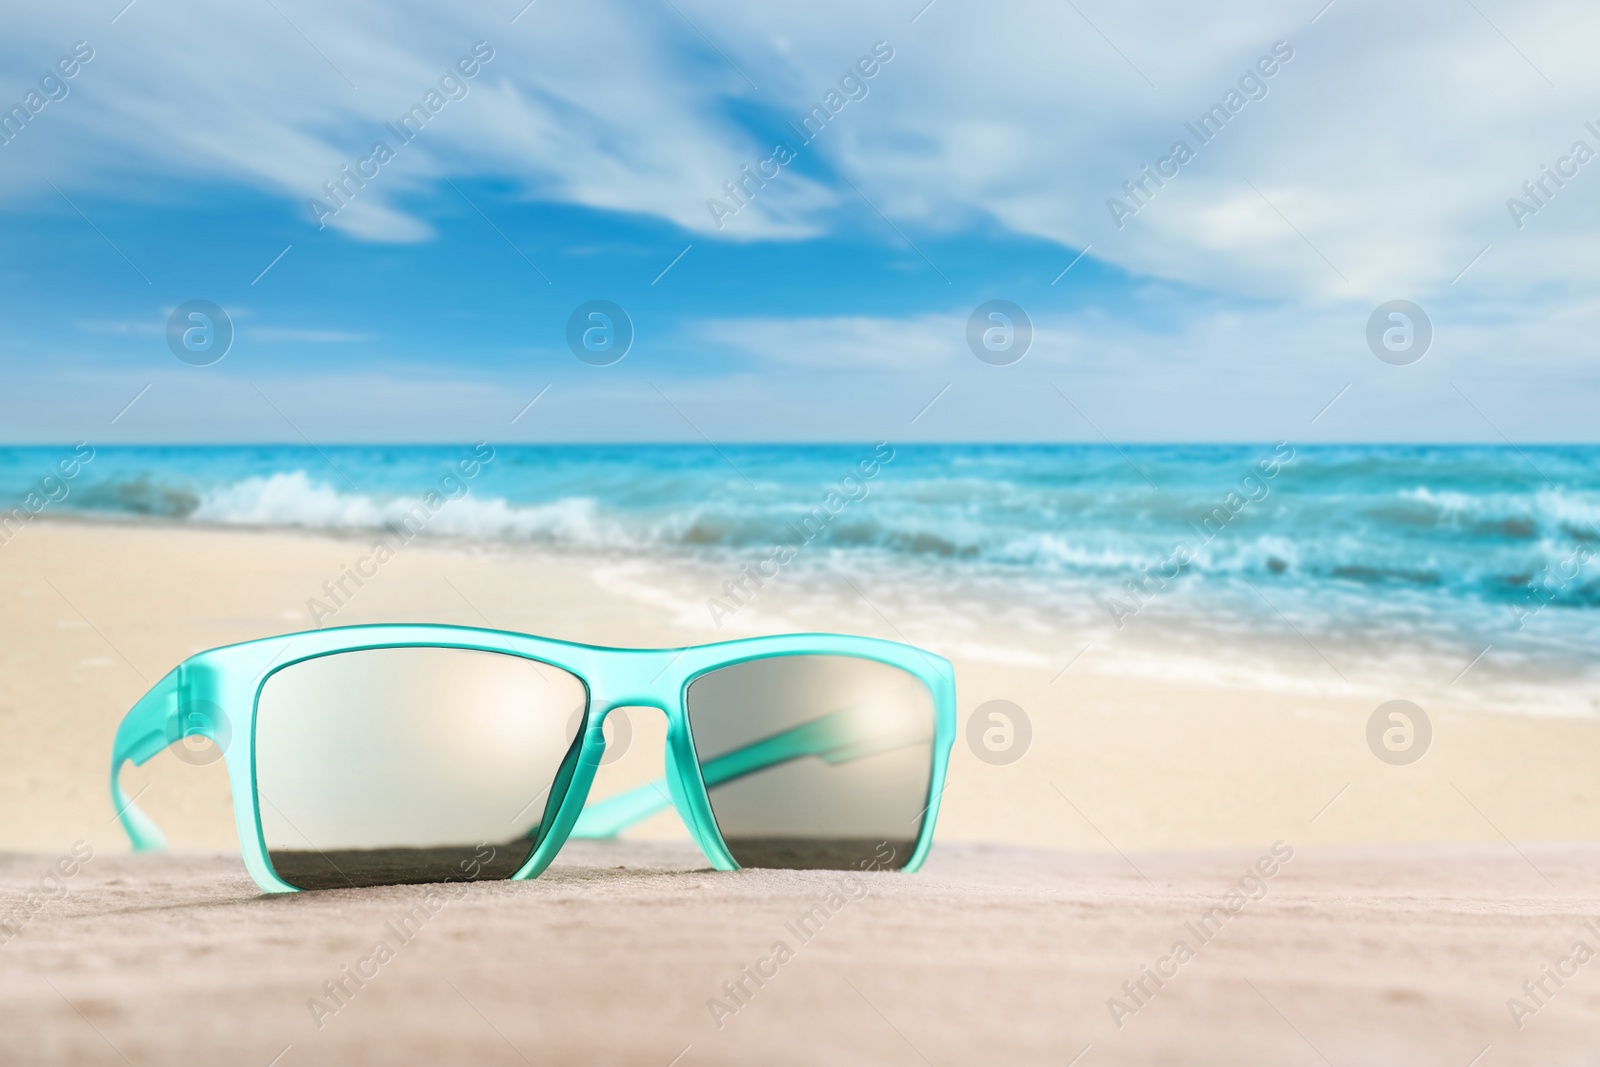 Image of Stylish sunglasses on sandy beach near sea